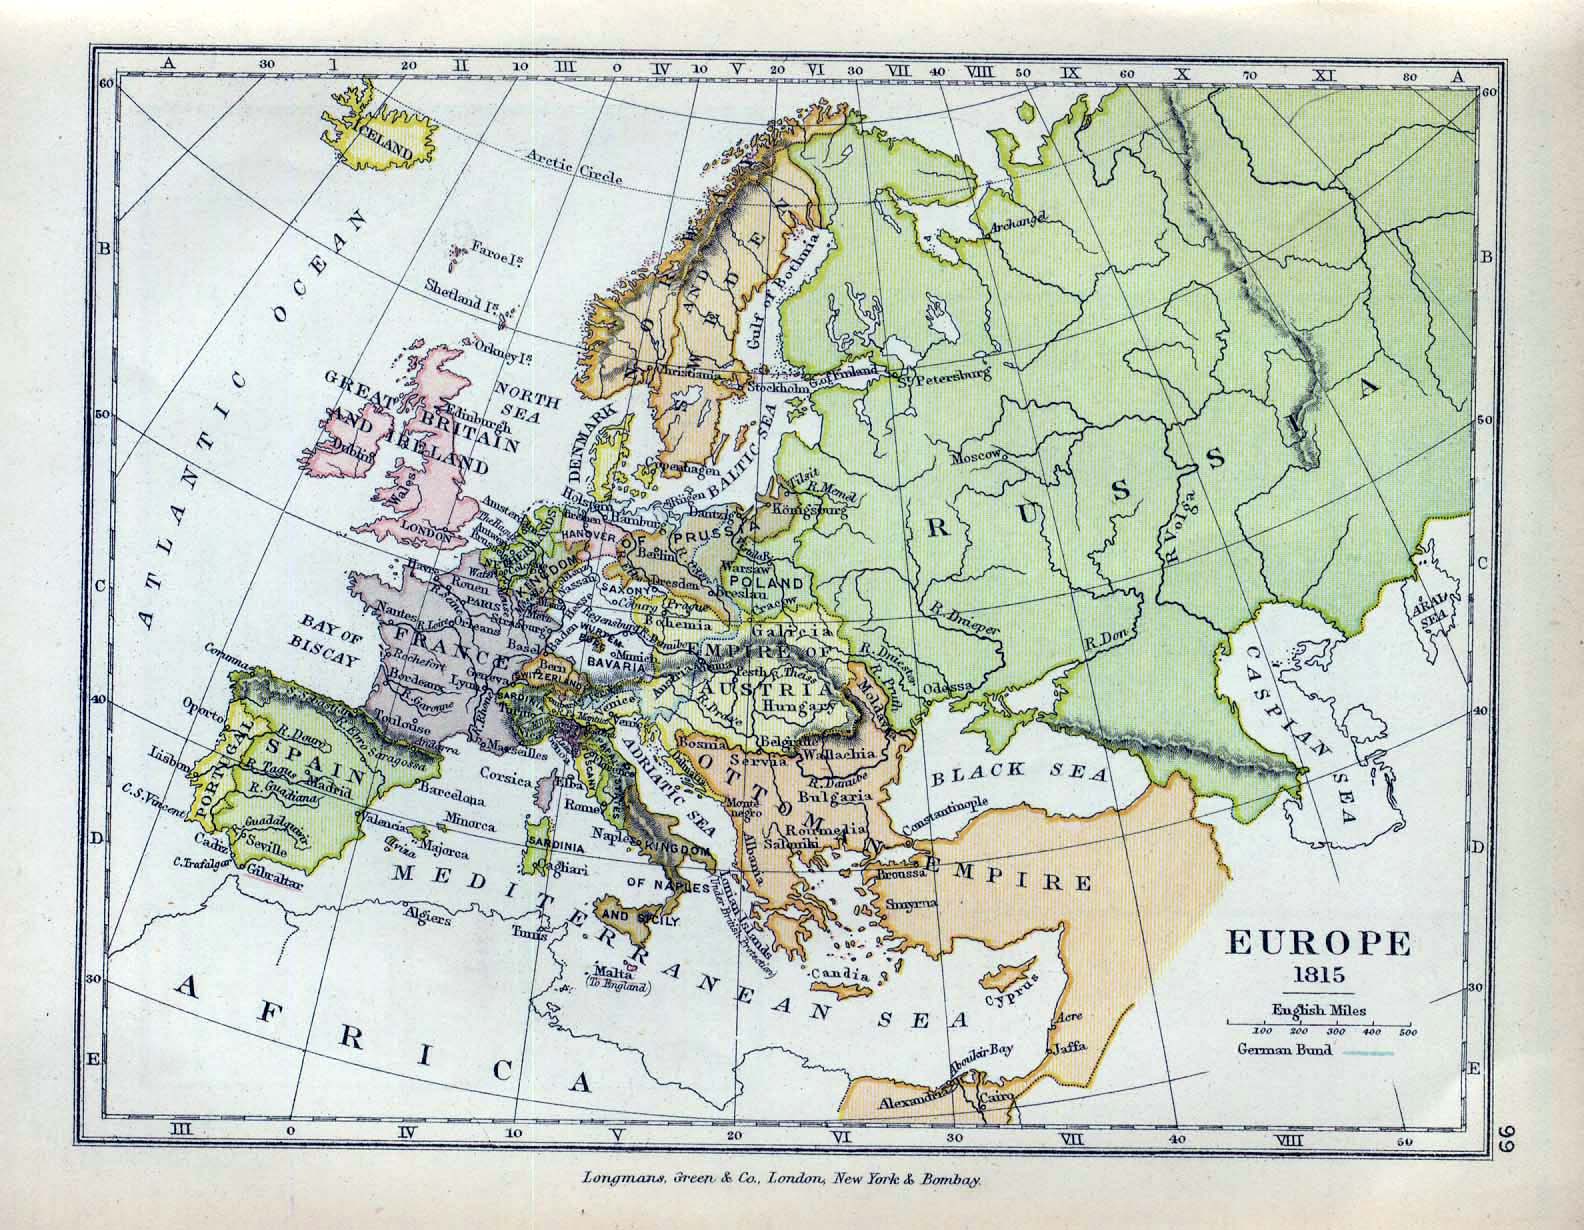 Map Of Europe Congress Of Vienna